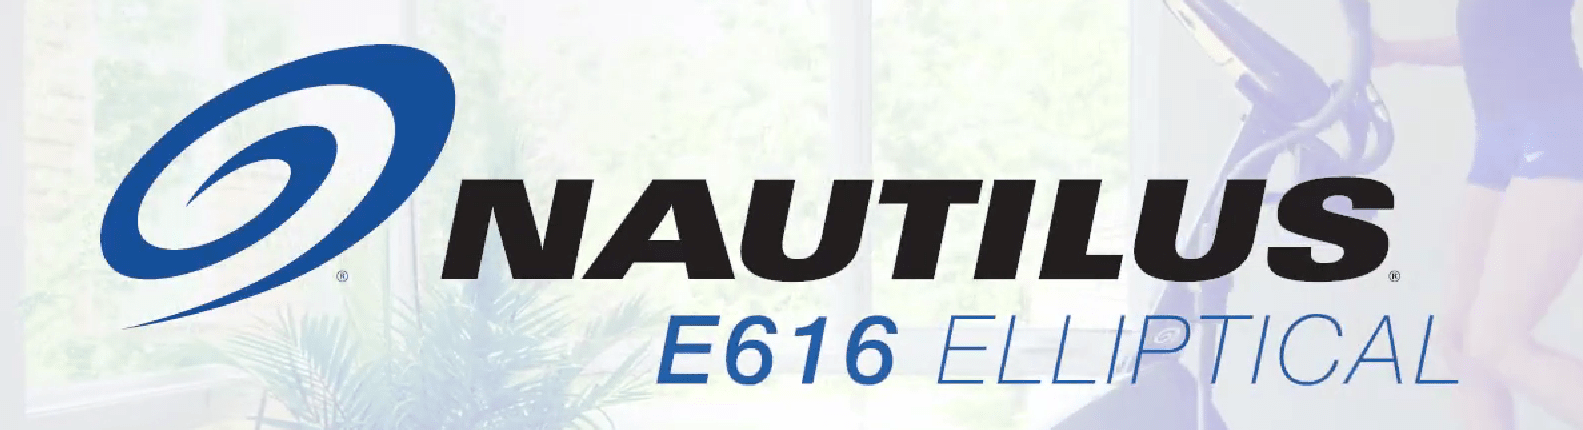 Nautilus E616 Elliptical